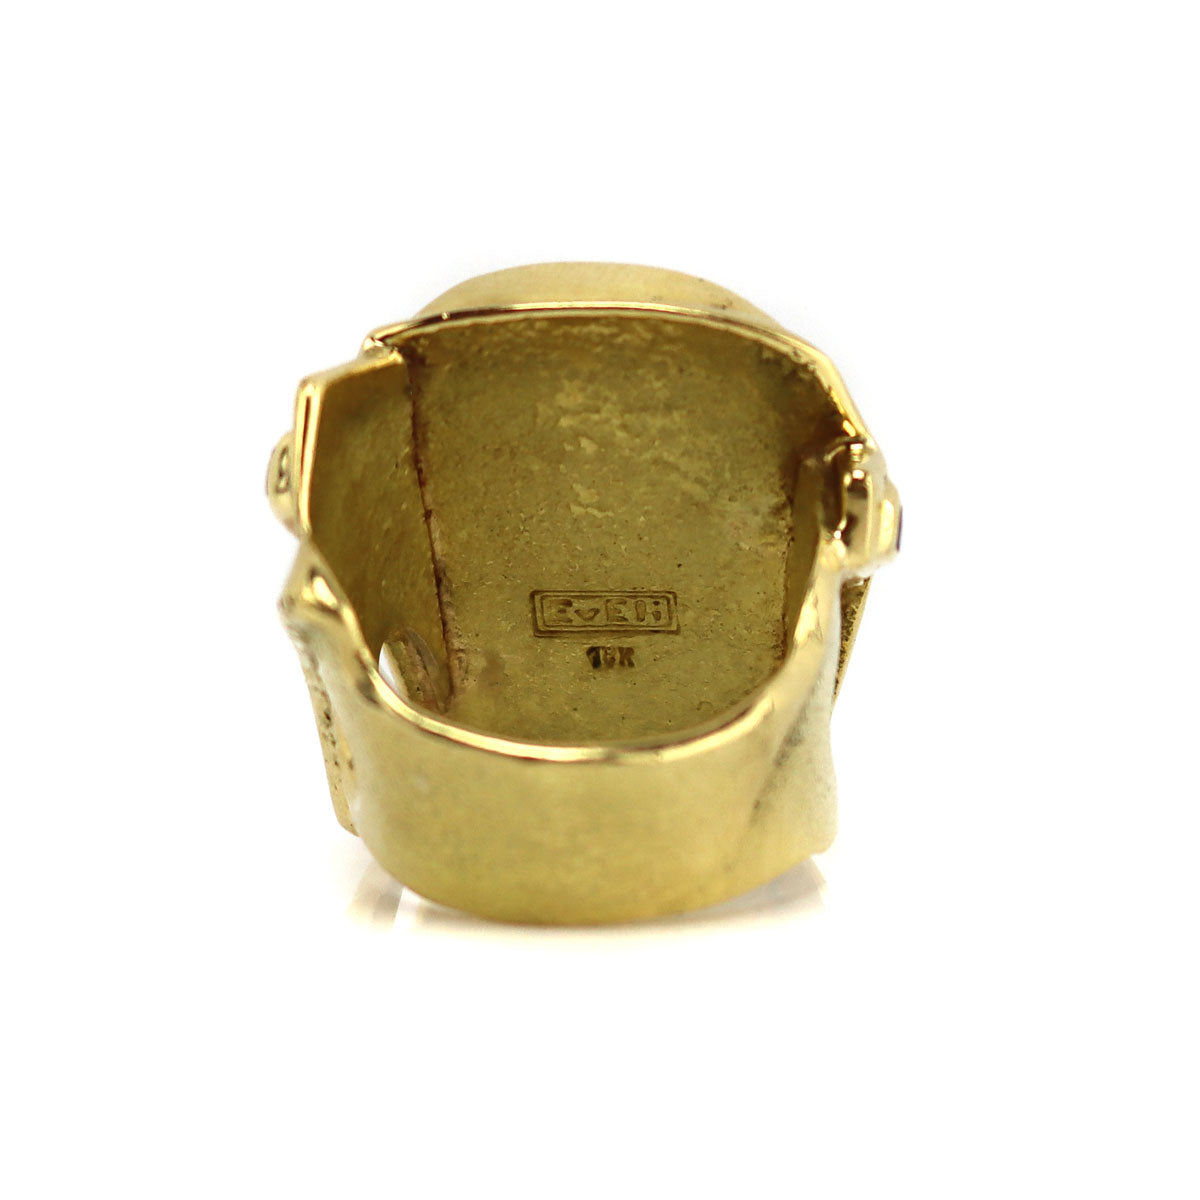 Eveli Sabatie - Sugilite 18K Gold Ring c. 1990s, size 9